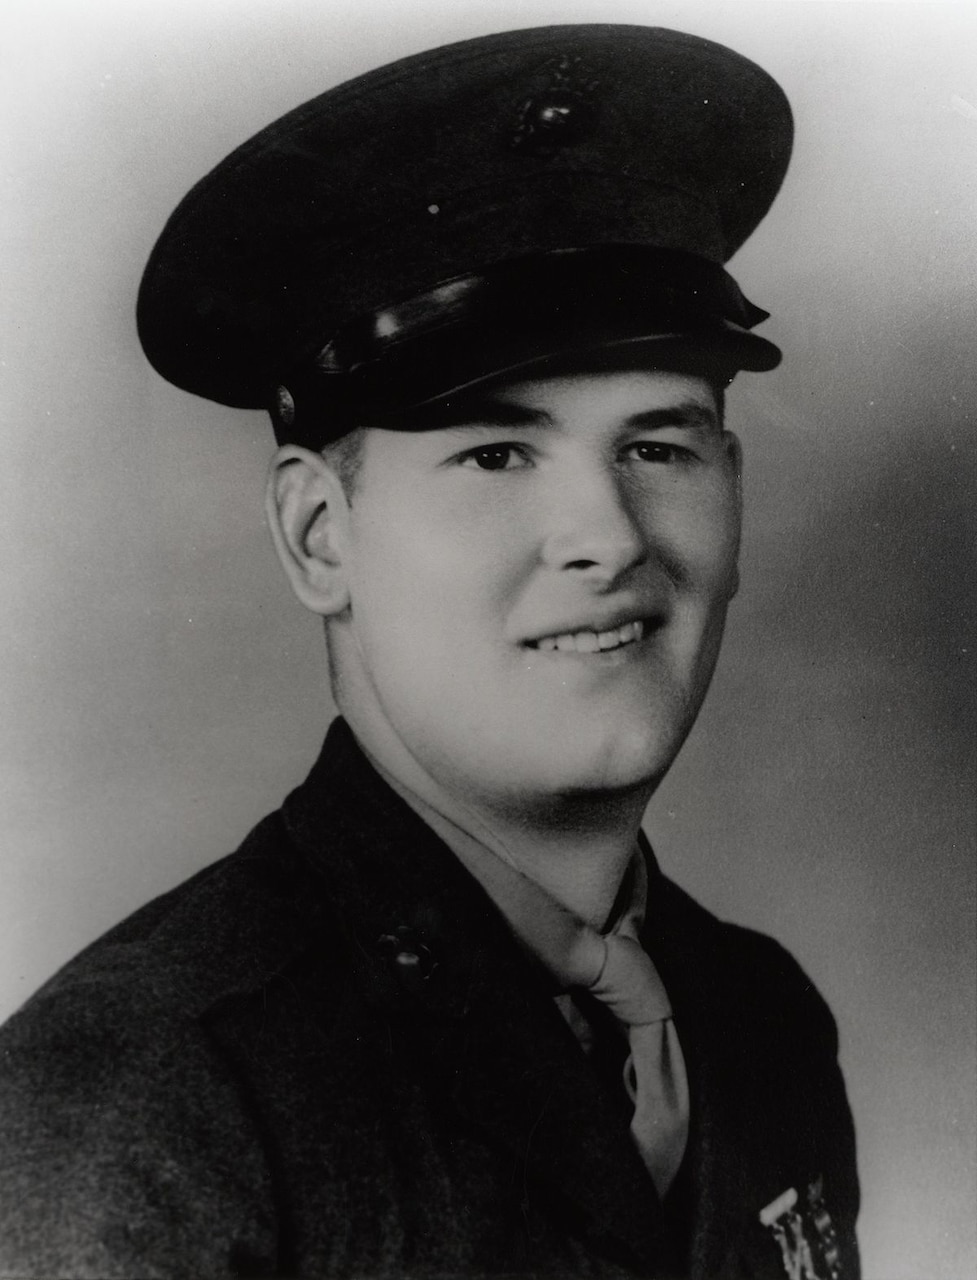 A man in a World War II uniform and cap smiles.